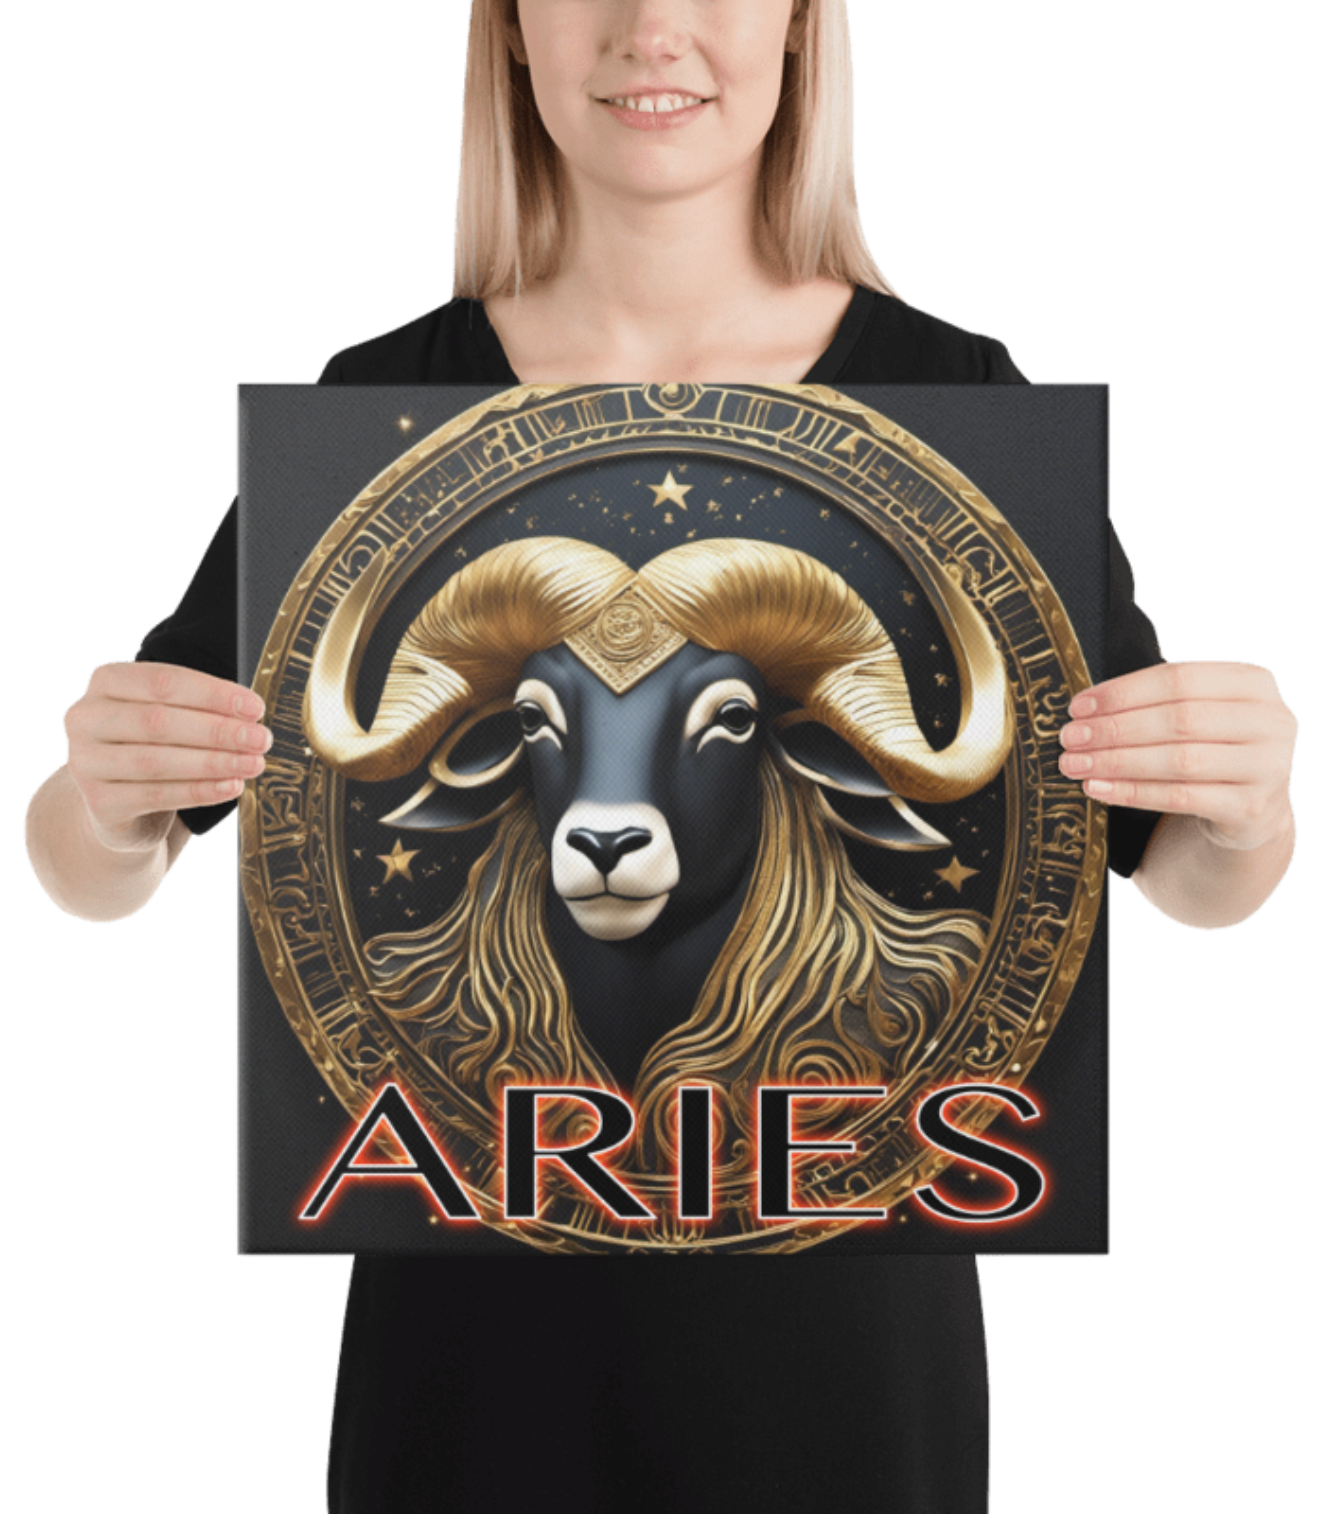 Aries Zodiac Print On Canvas